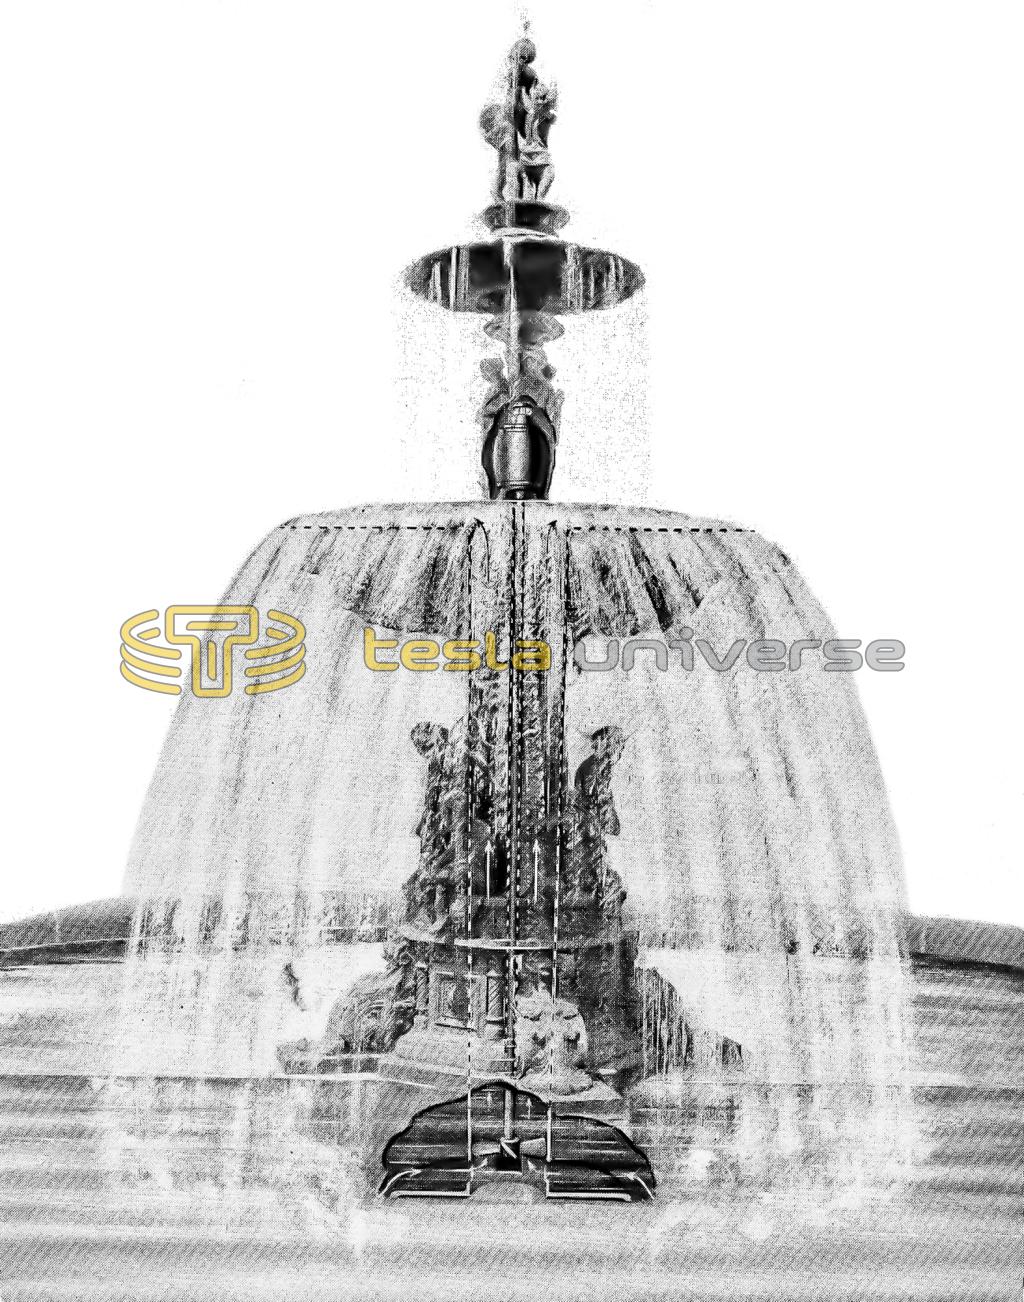 Nikola Tesla's fountain designed for Tiffany's department store